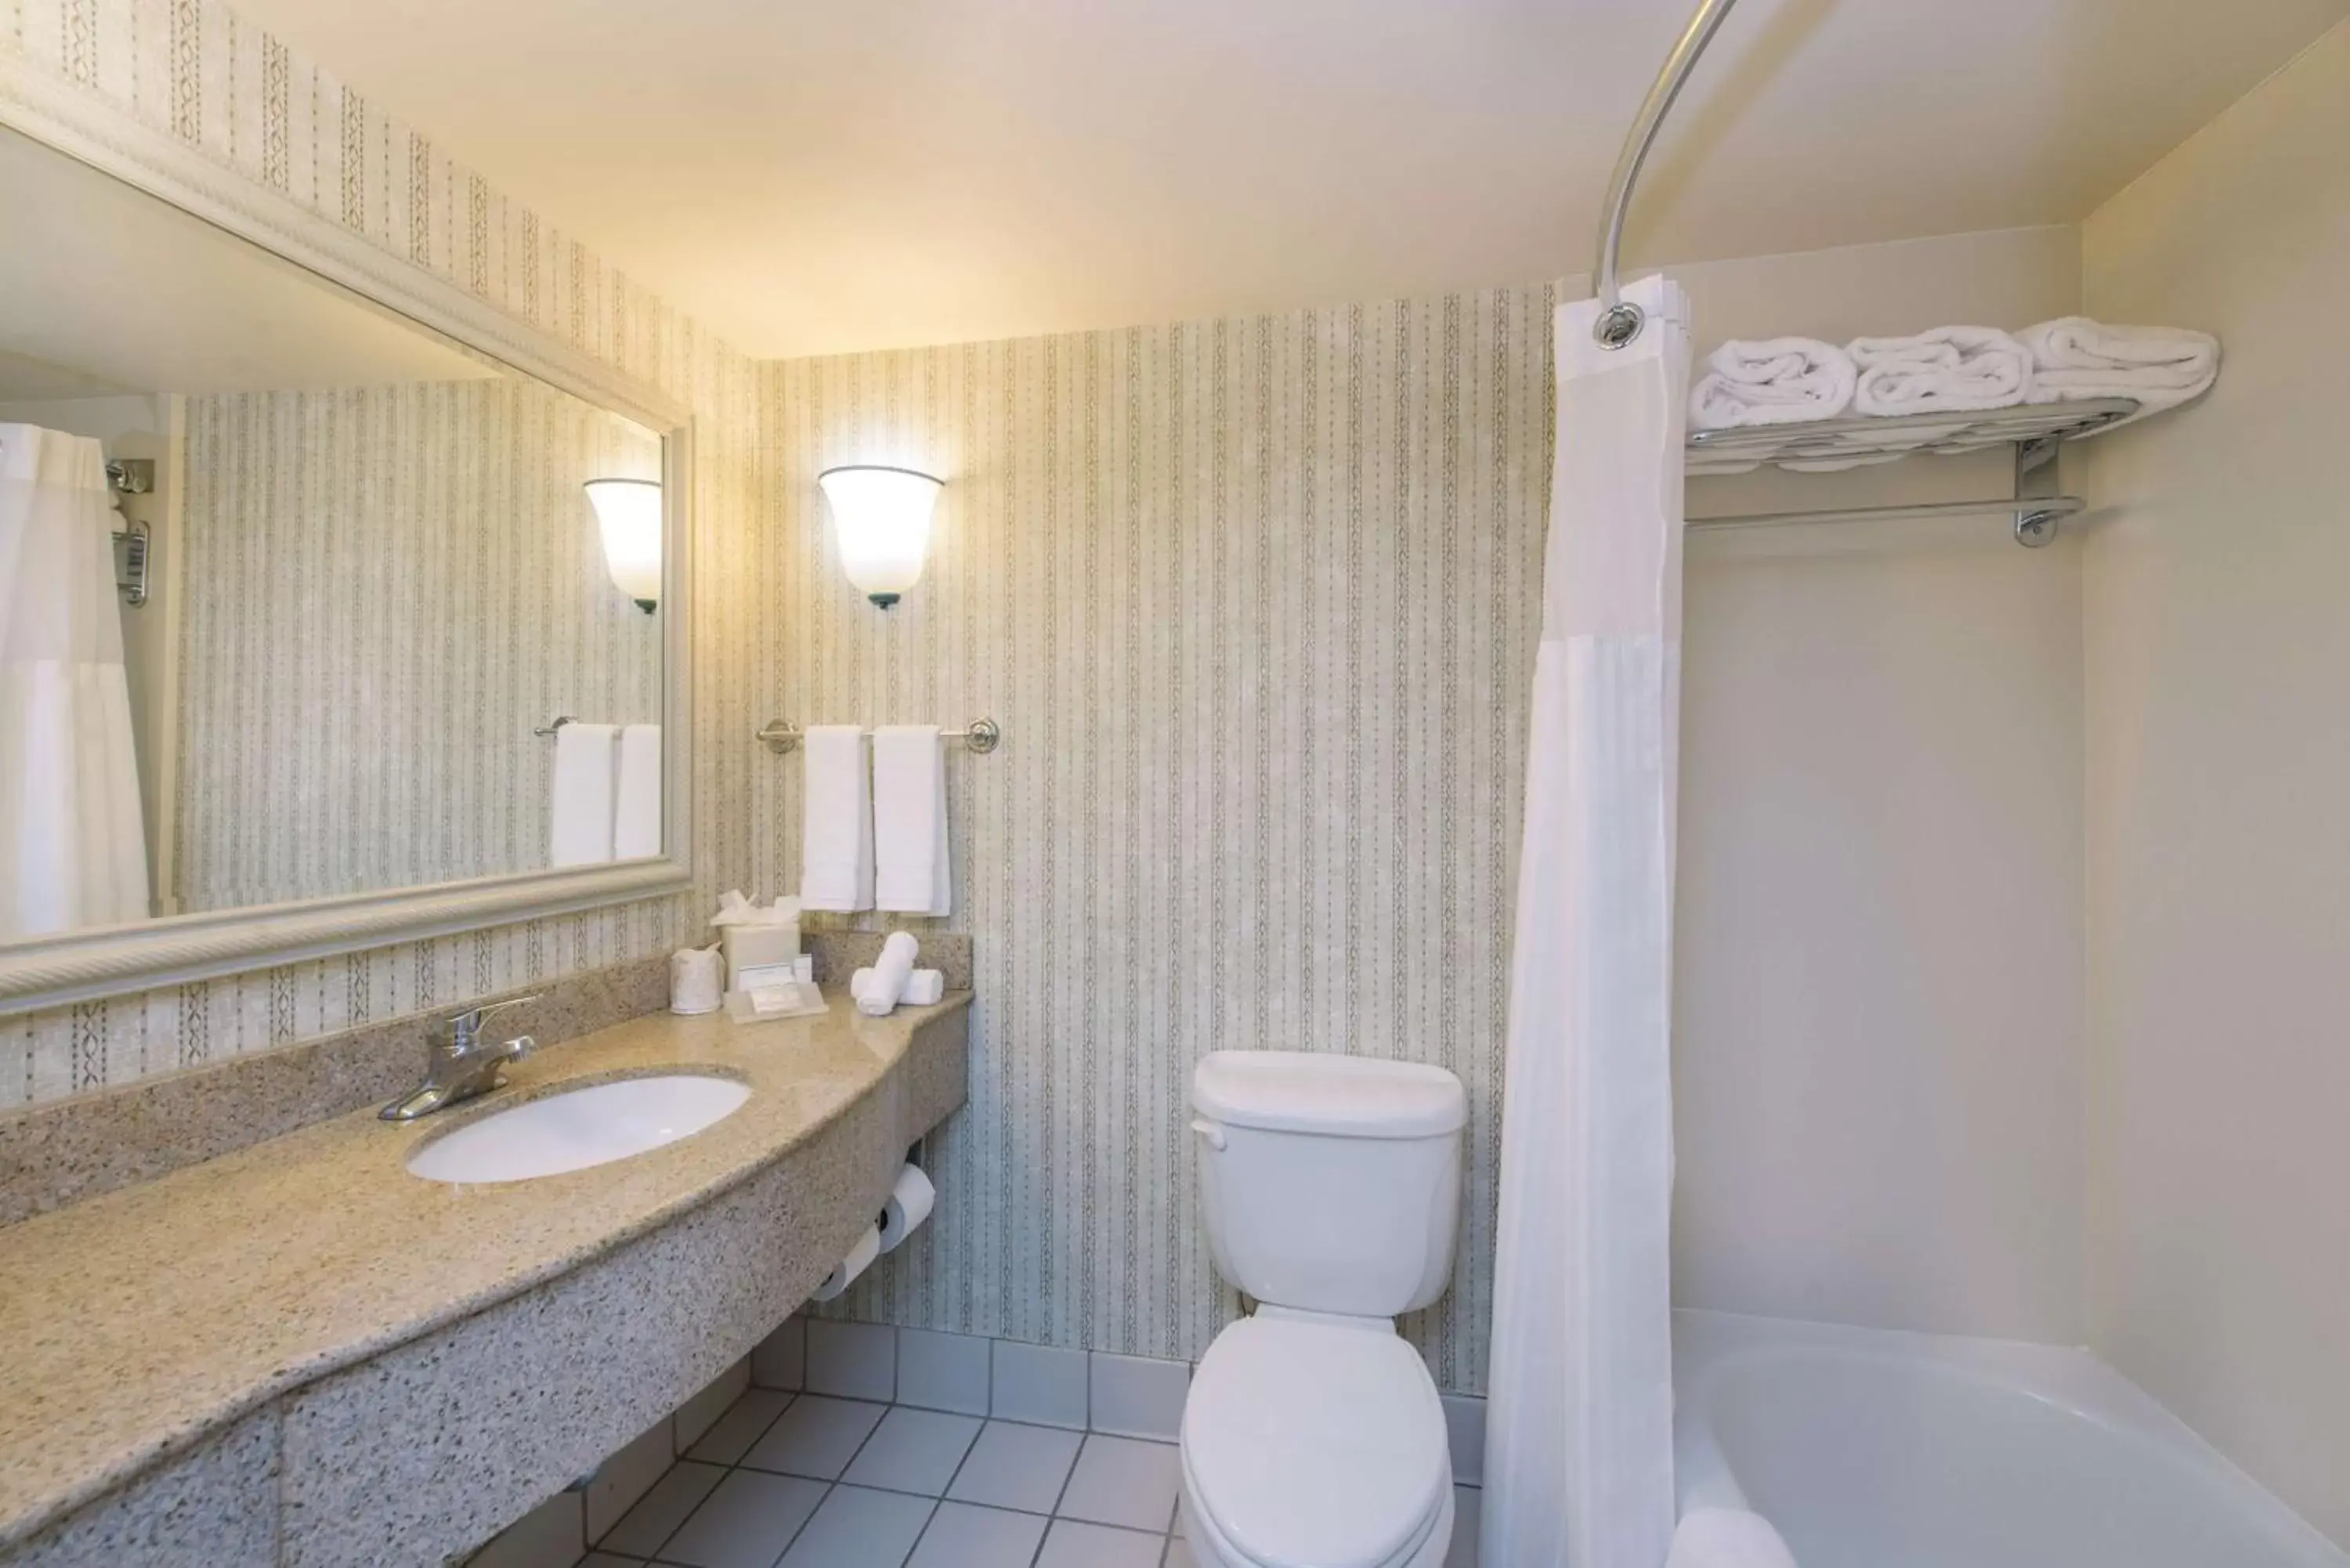 Bathroom in Hilton Garden Inn Poughkeepsie/Fishkill